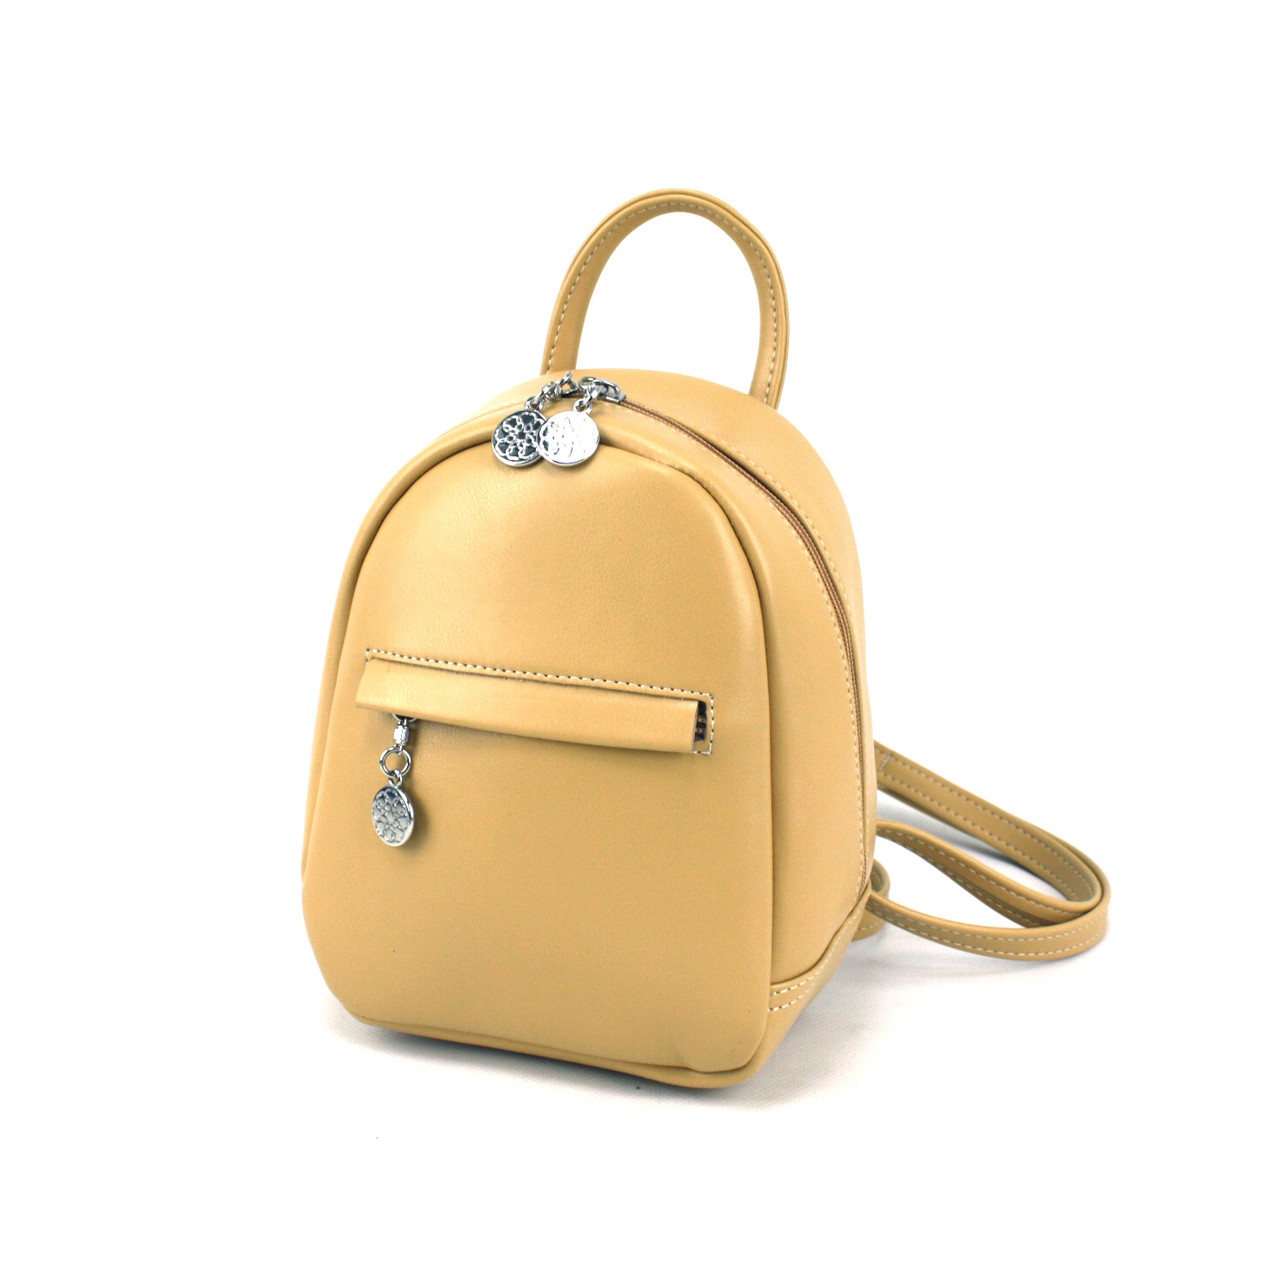 Жіноча міні сумка-рюкзак Voila 935543 жовта